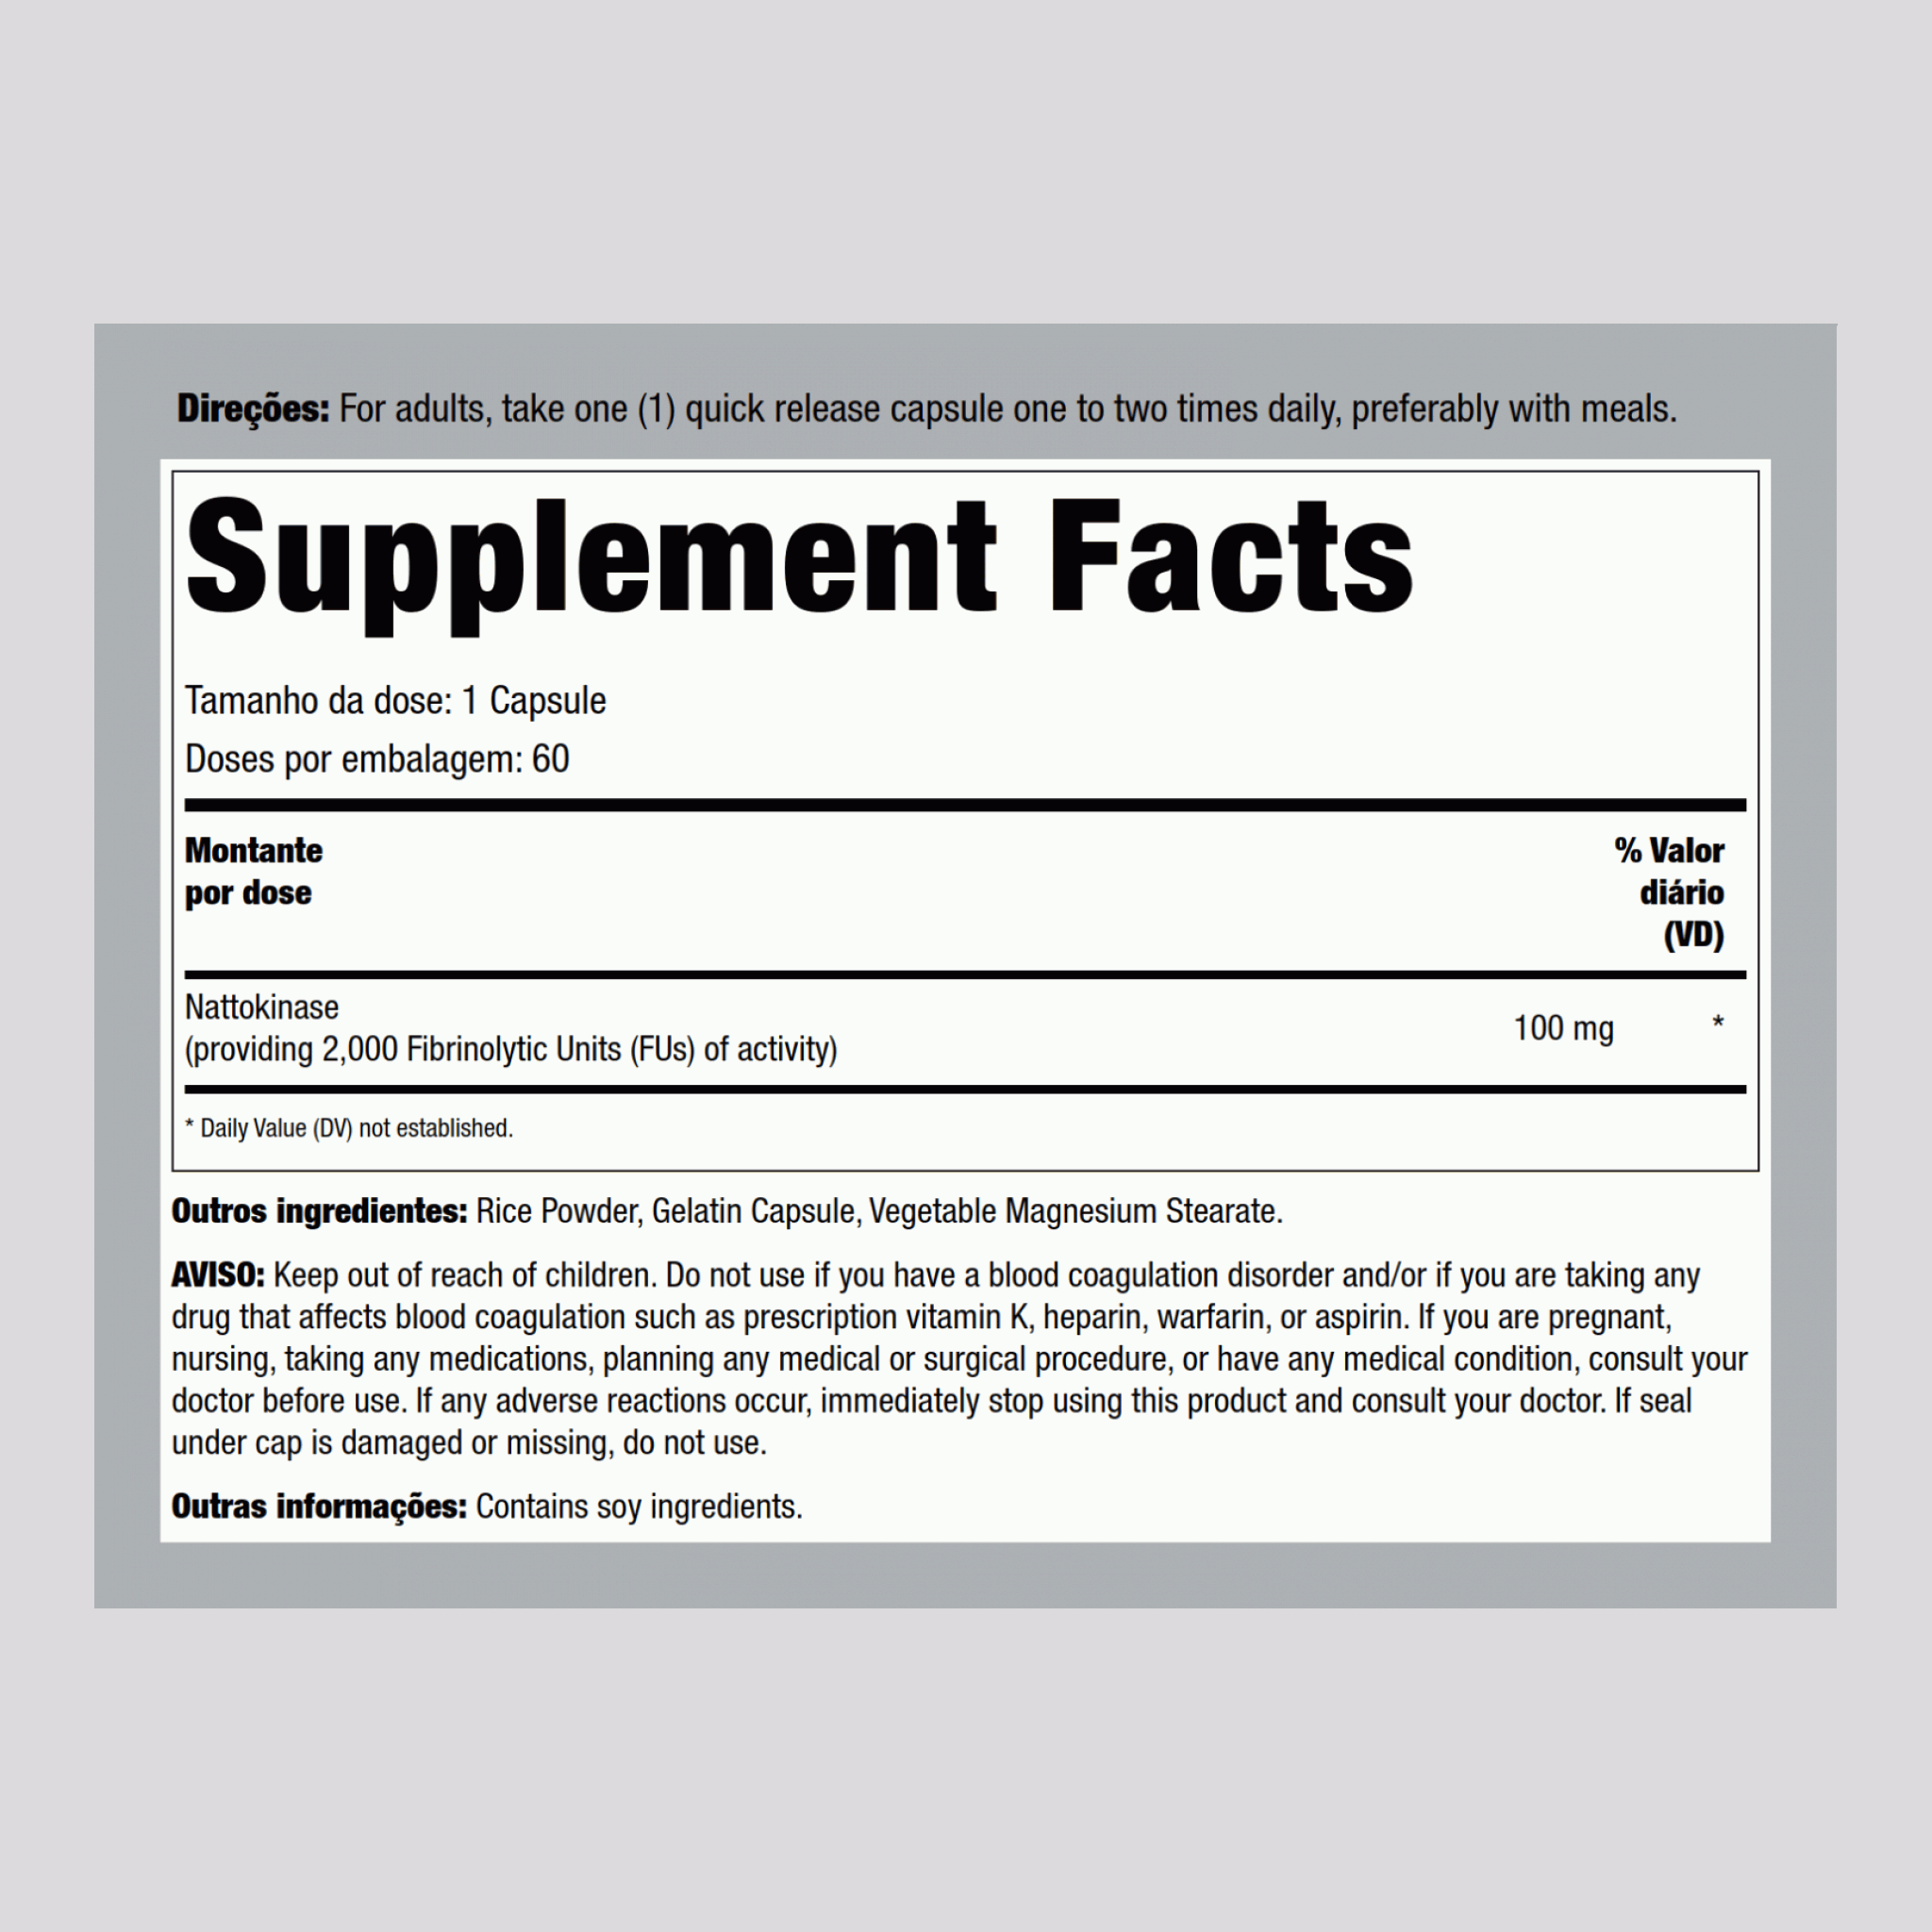 Nattokinase (2,000 FU), 100 mg, 60 Quick Release Capsules, 2  Bottles